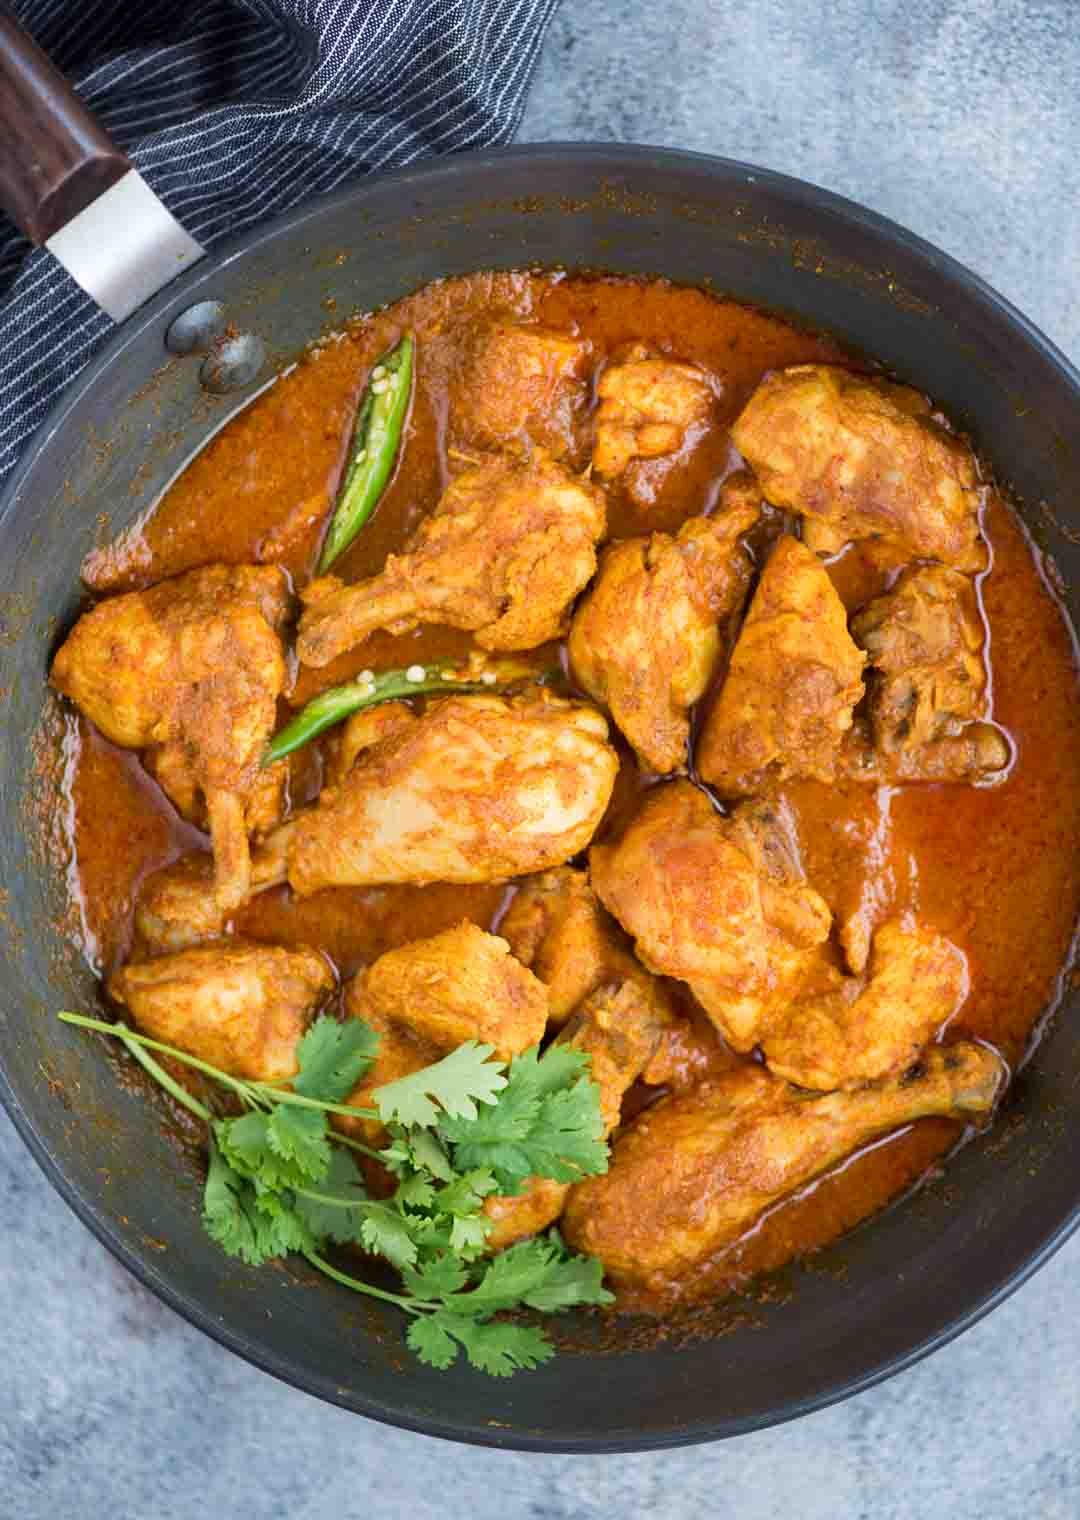 Zero Oil Indian Chili Chicken with Veggies Recipe